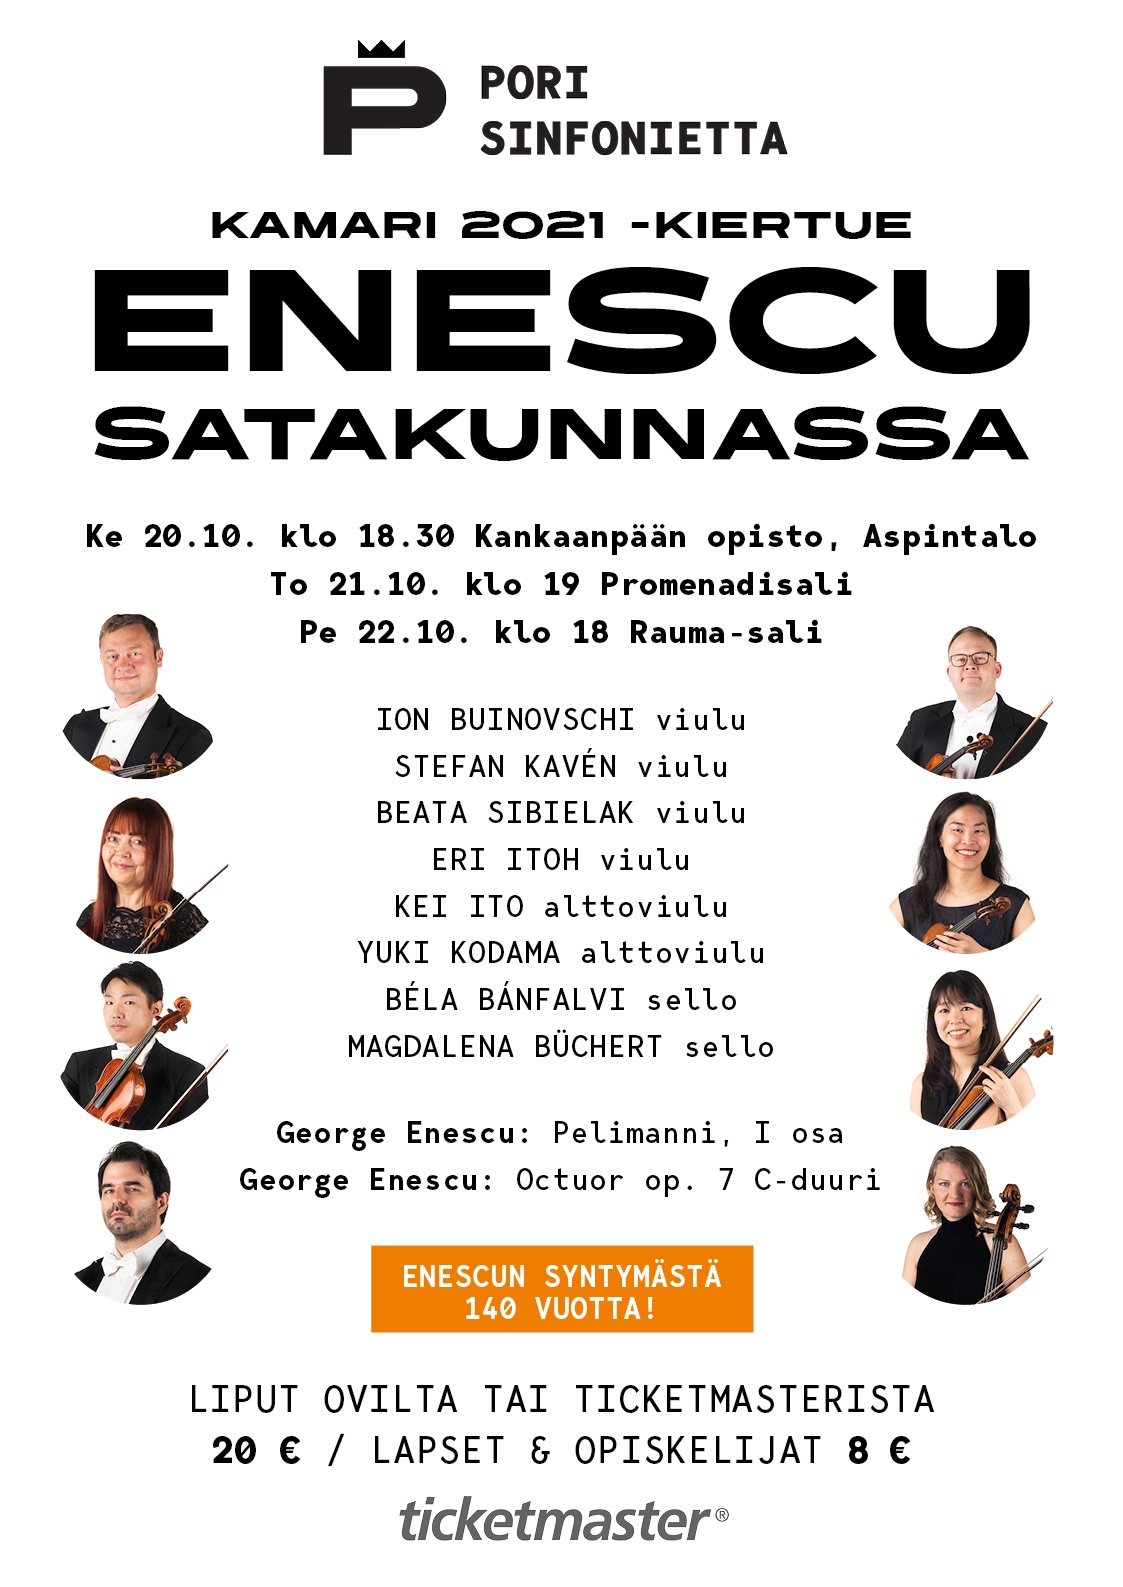 Enescu Satakunnassa -konserttijuliste.